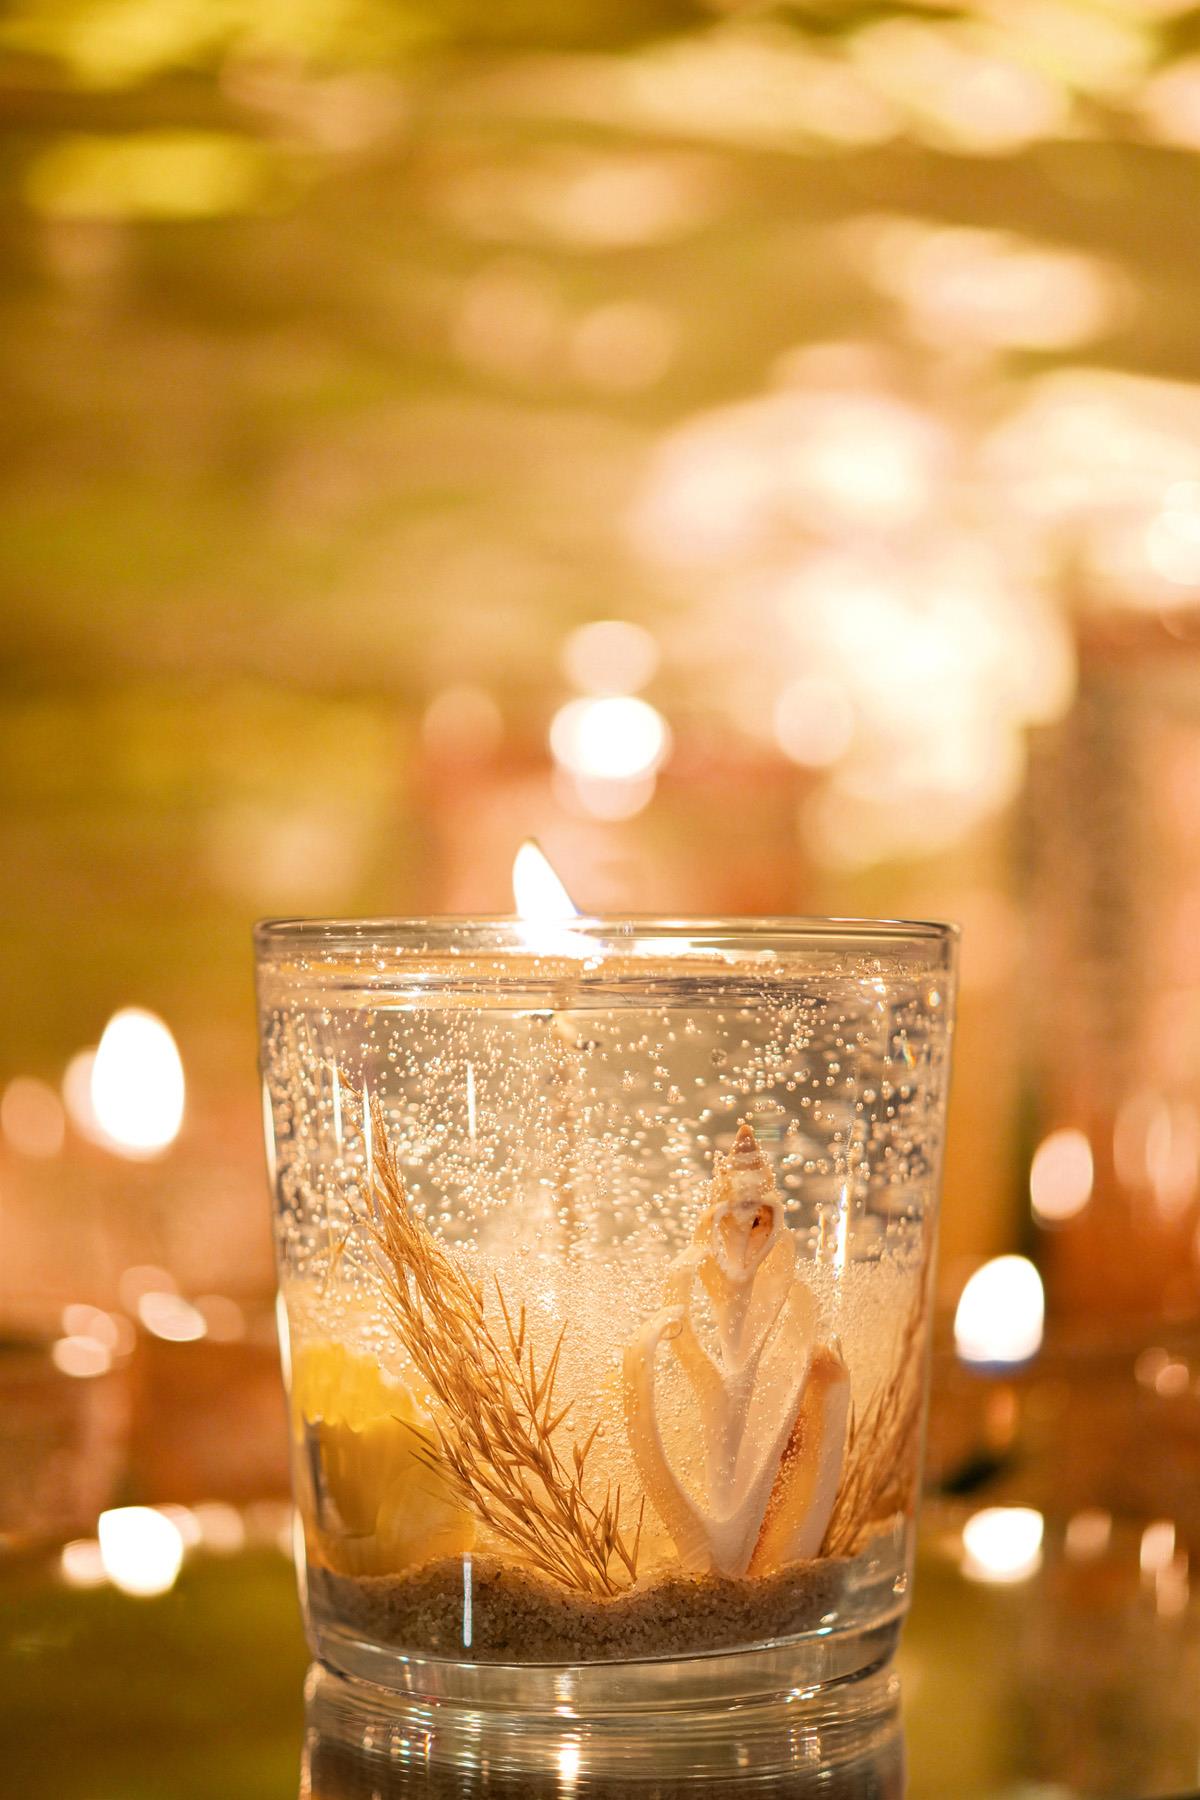 Handmade fragrant gel candle code: Oleonon